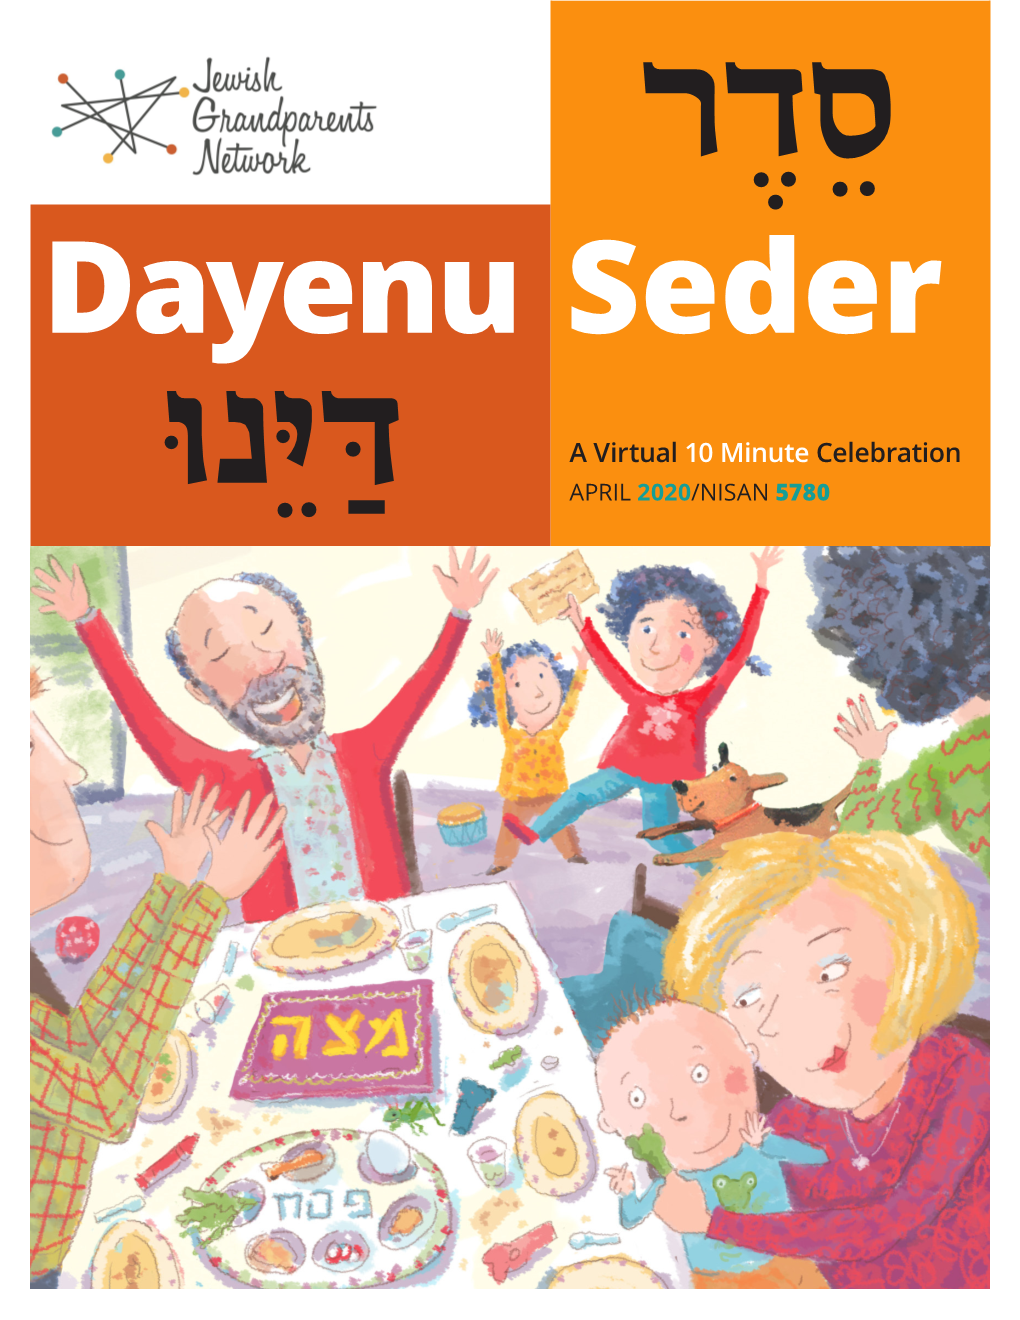 Dayenu Seder